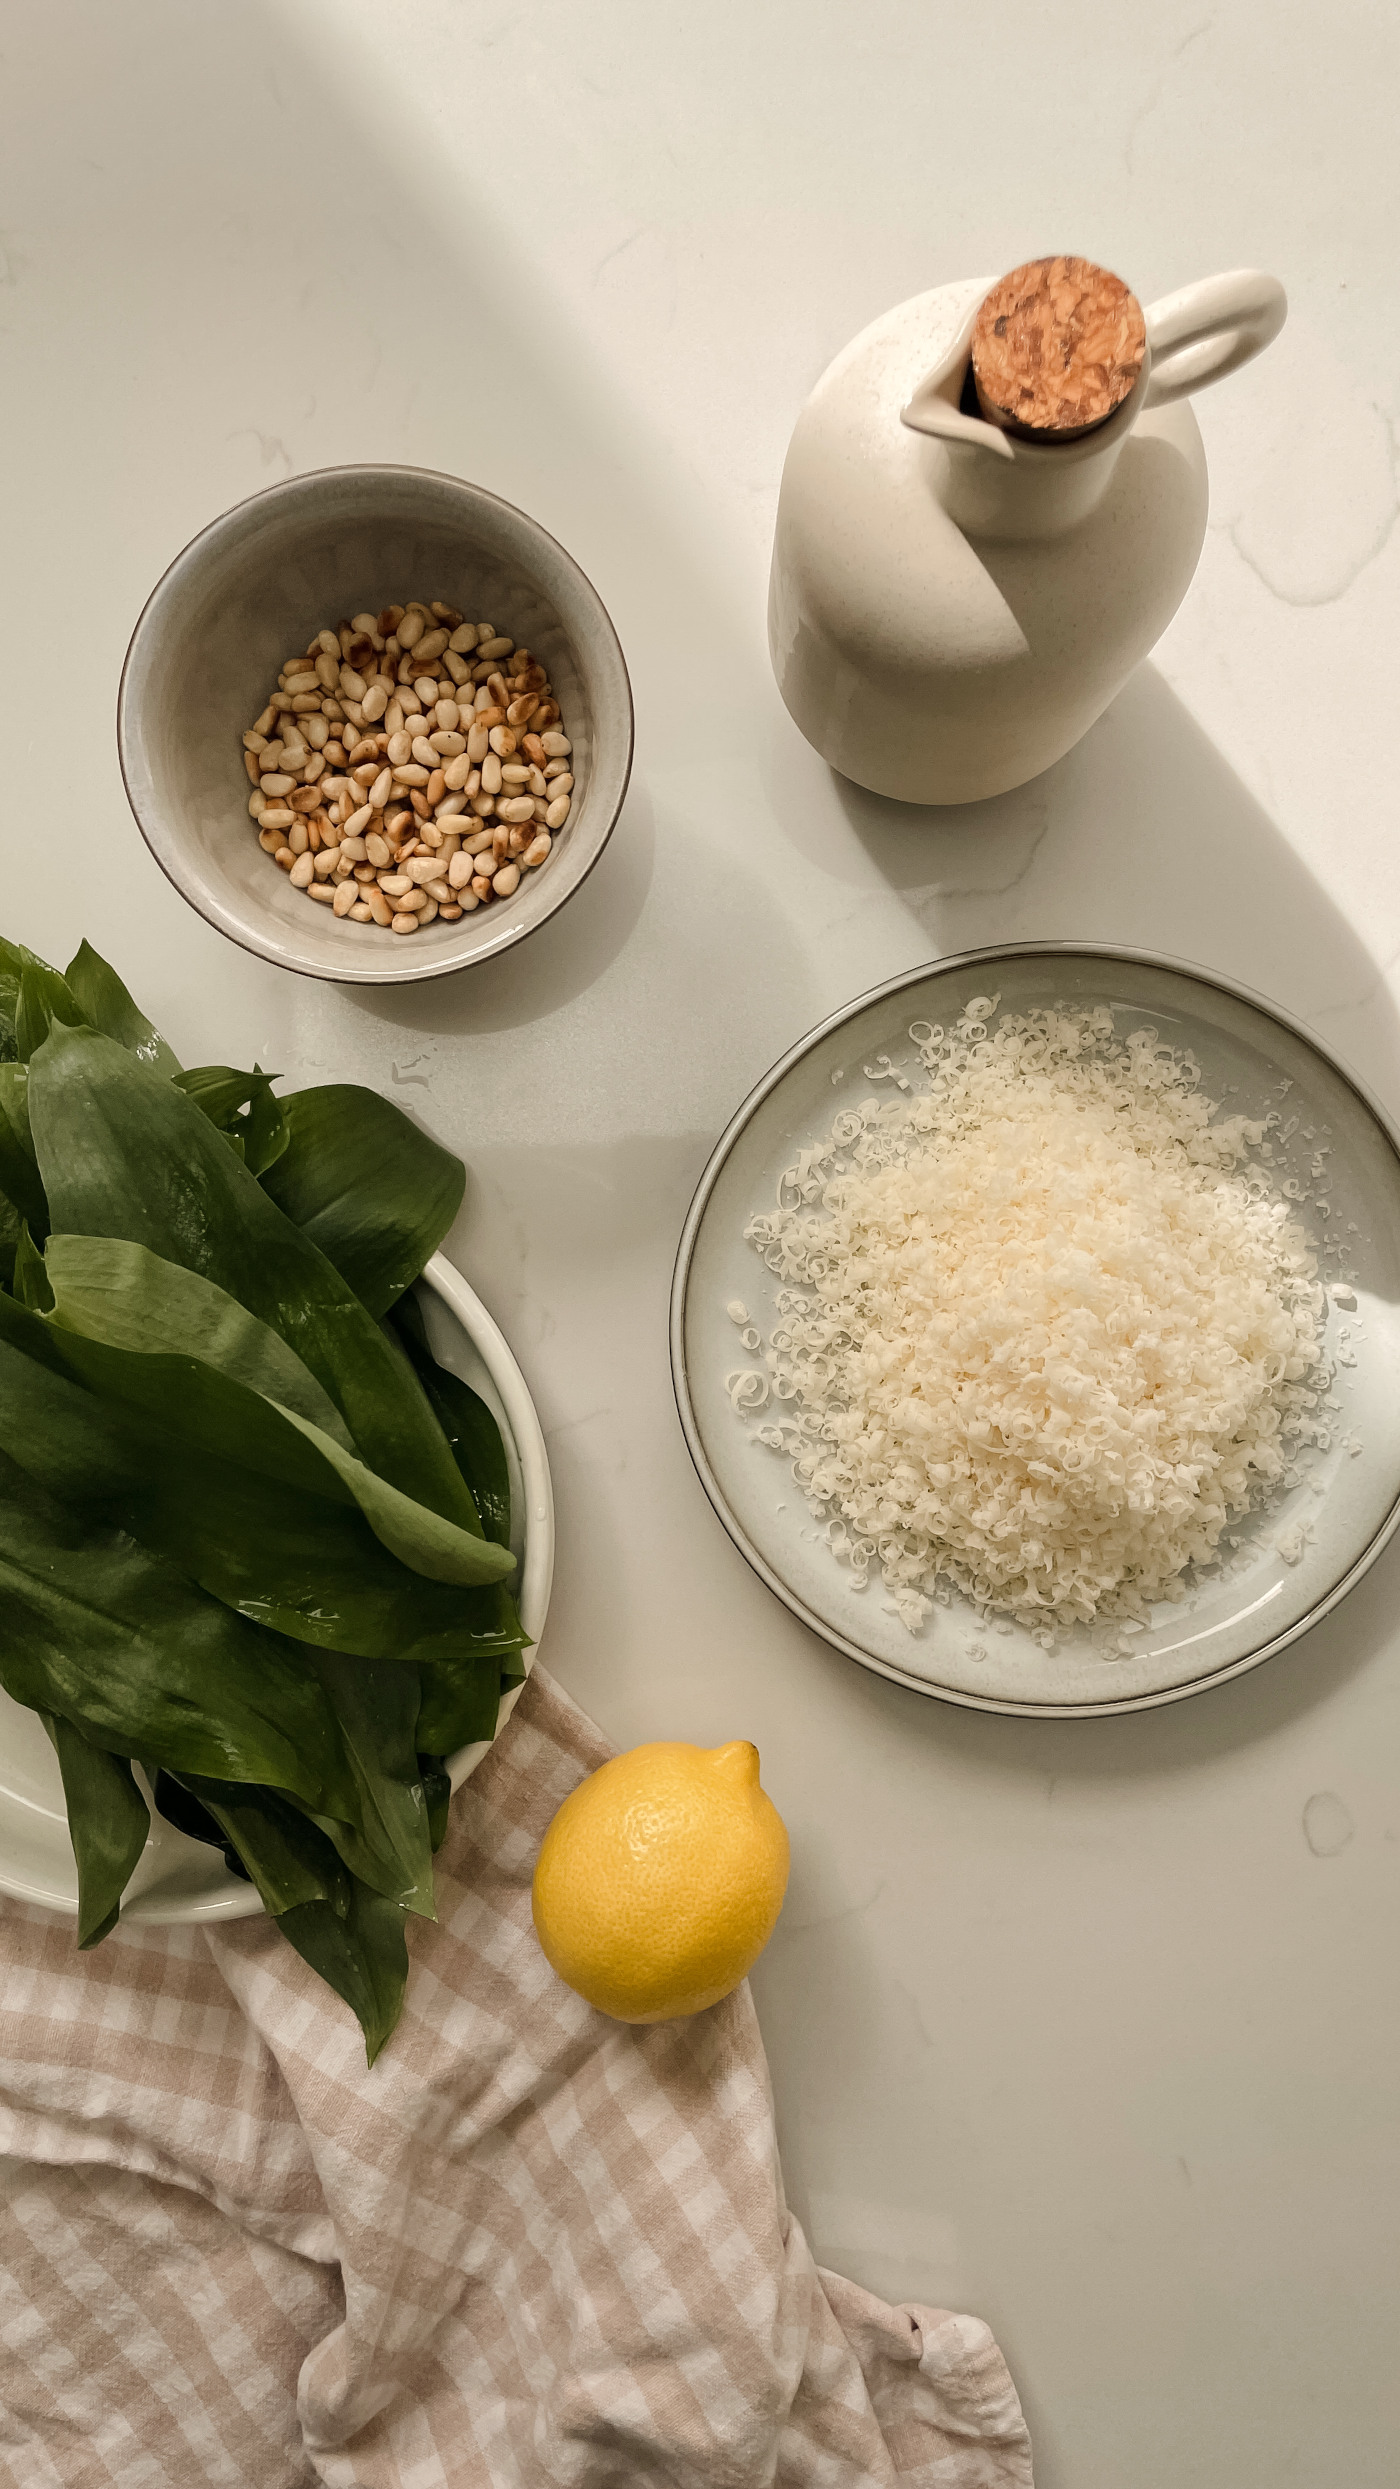 Ingredients for wild garlic pesto